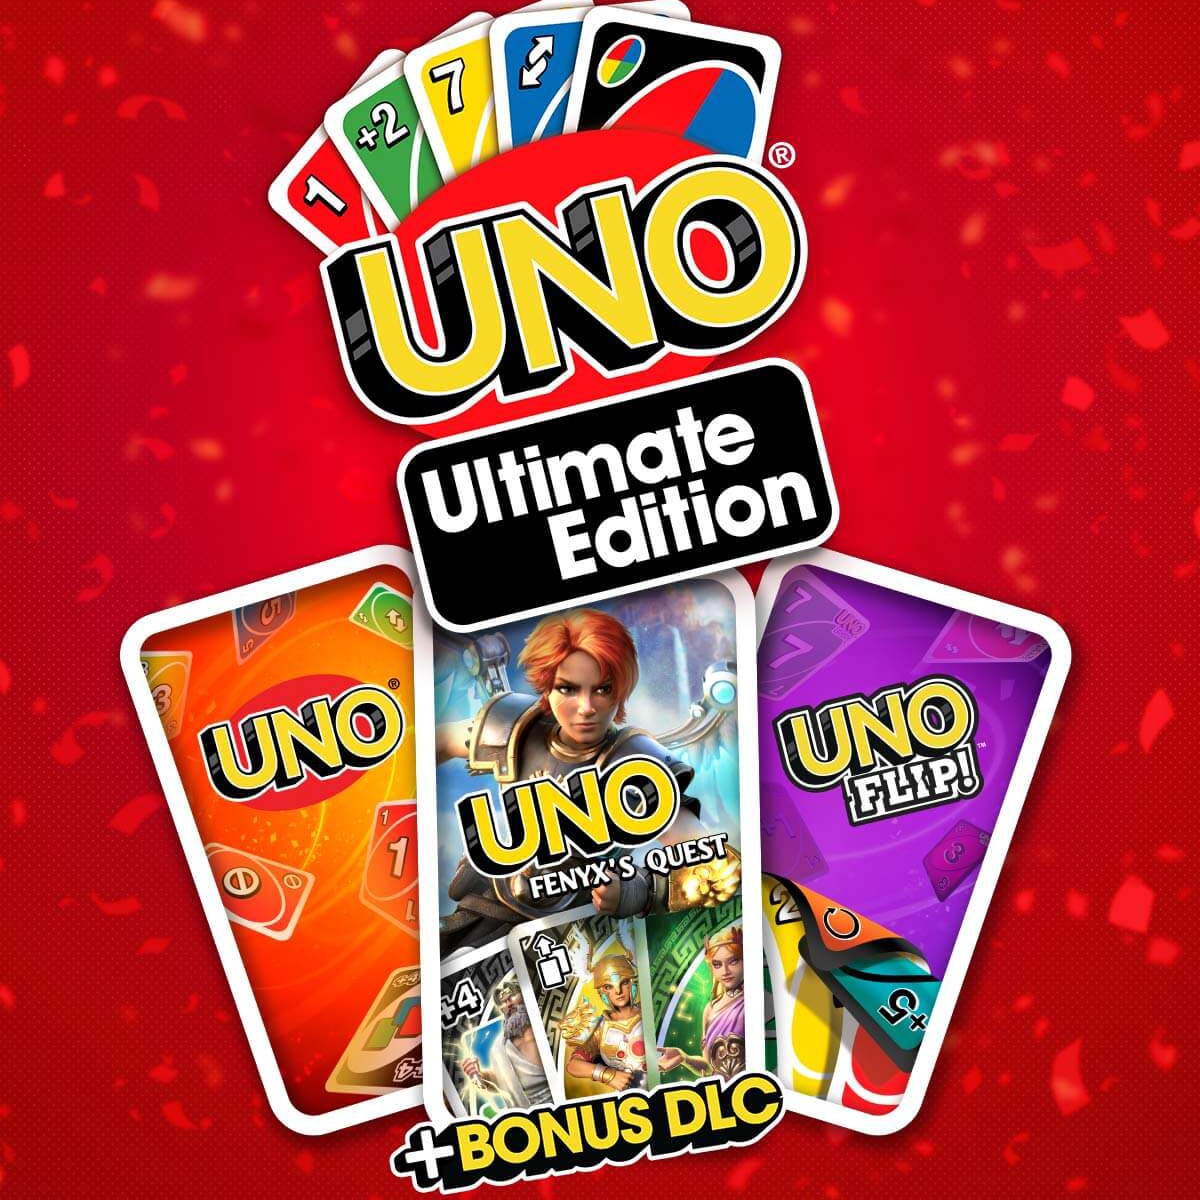 UNO Ultimate Edition | PC | Ubisoft Digital Download